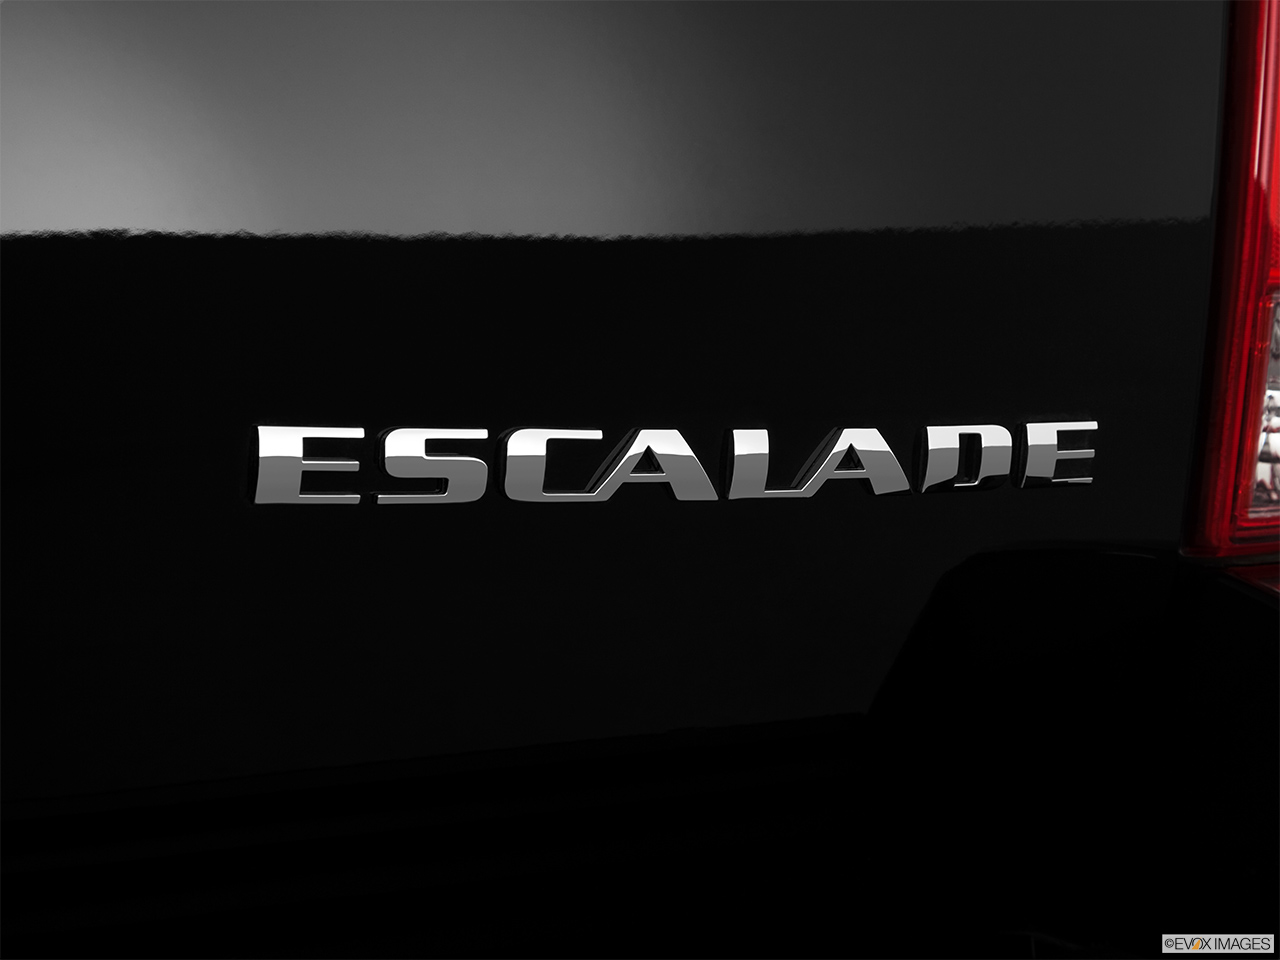 2012 Cadillac Escalade Hybrid Base Rear model badge/emblem 